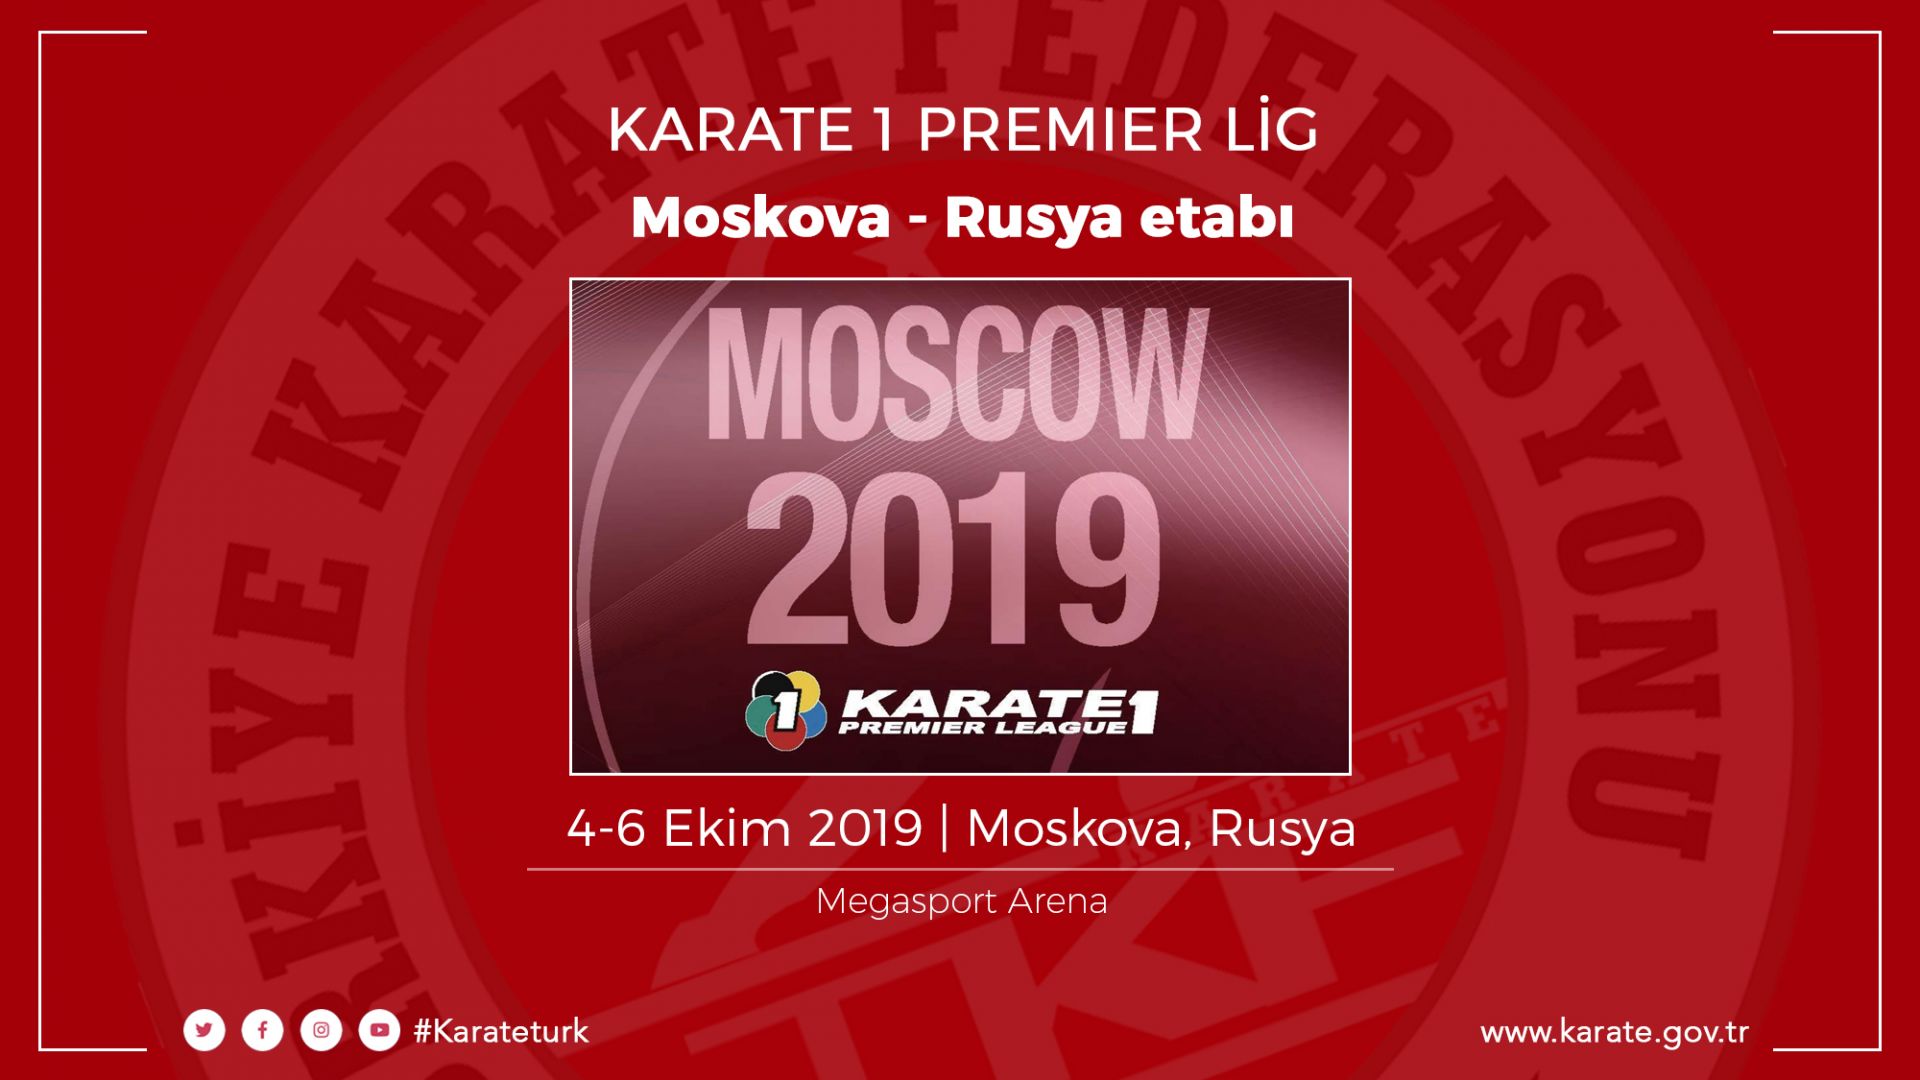 Karate 1 Premier Lig'de heyecan Rusya'ya taşındı